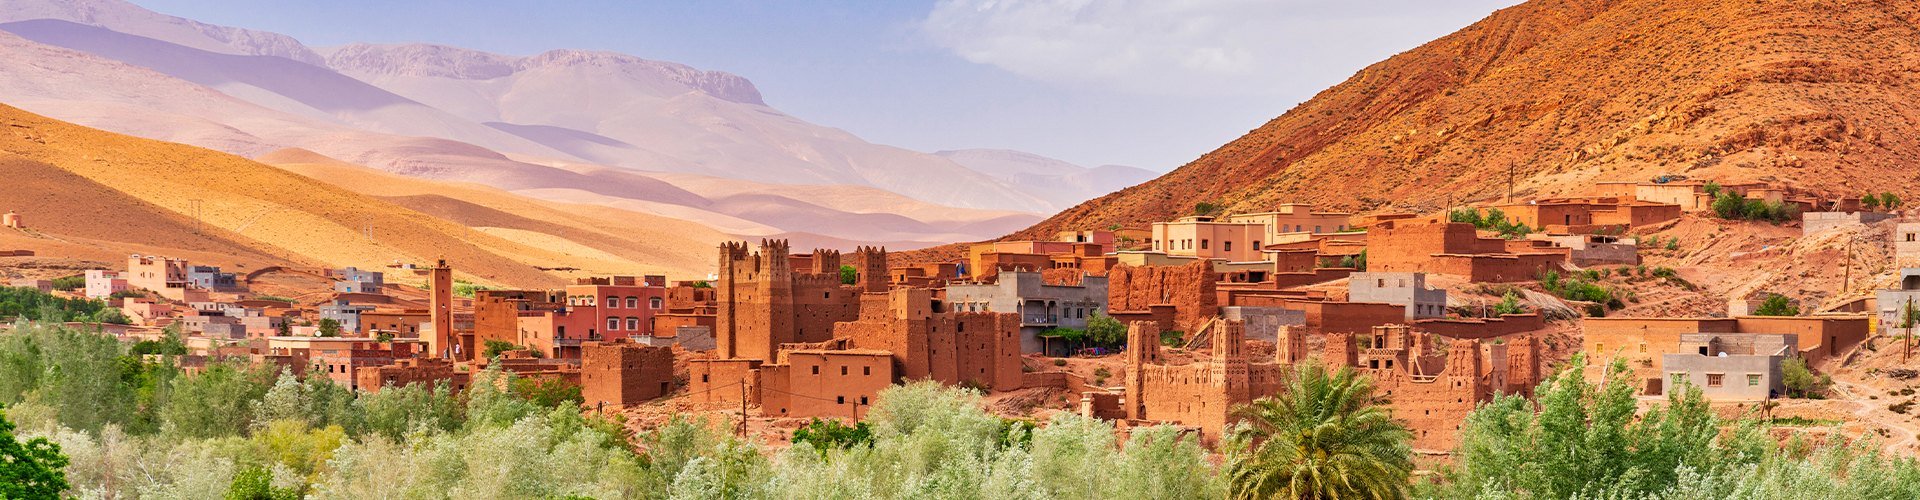 Familienurlaub in Marokko